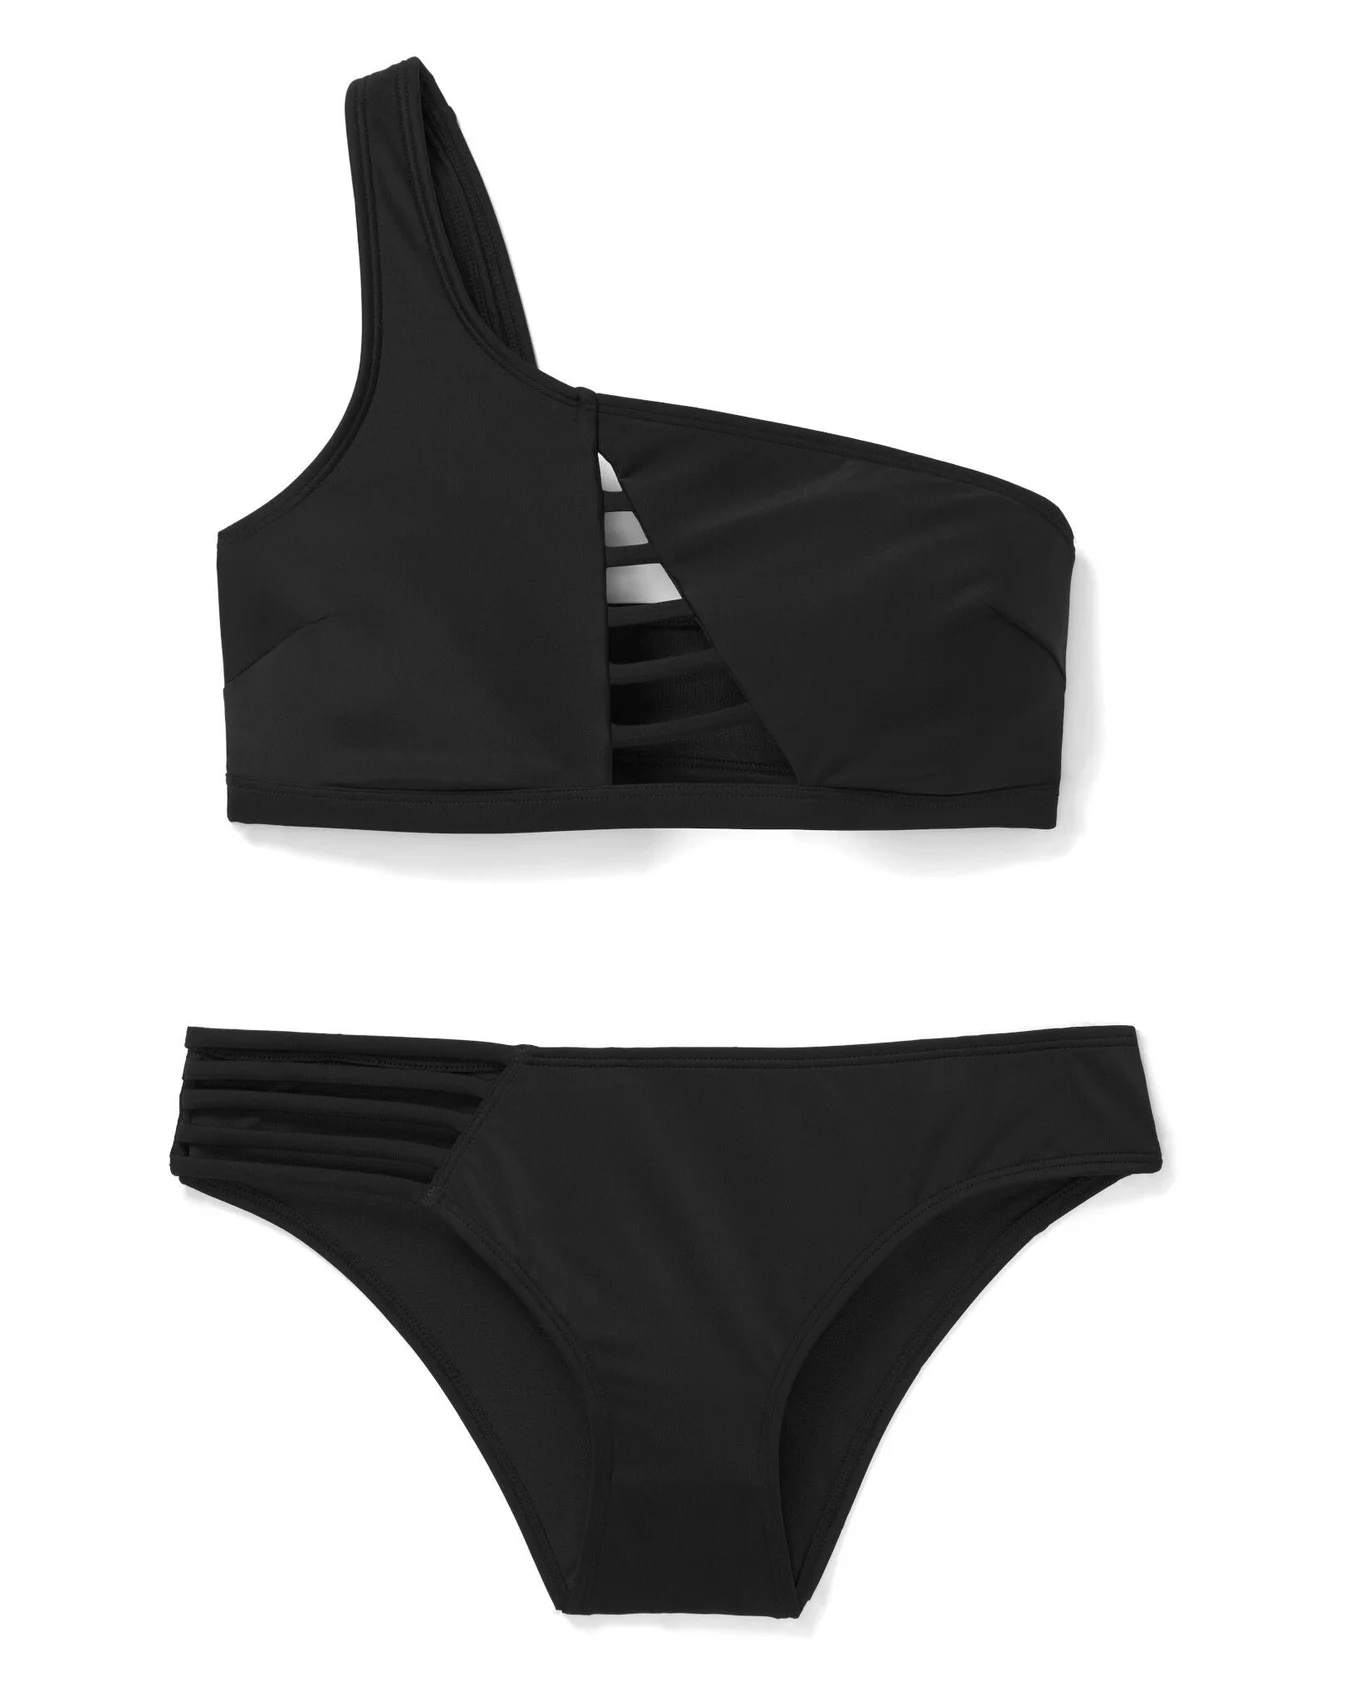 SHEIN Women's Single Shoulder Strap Black Lace Bra Lingerie